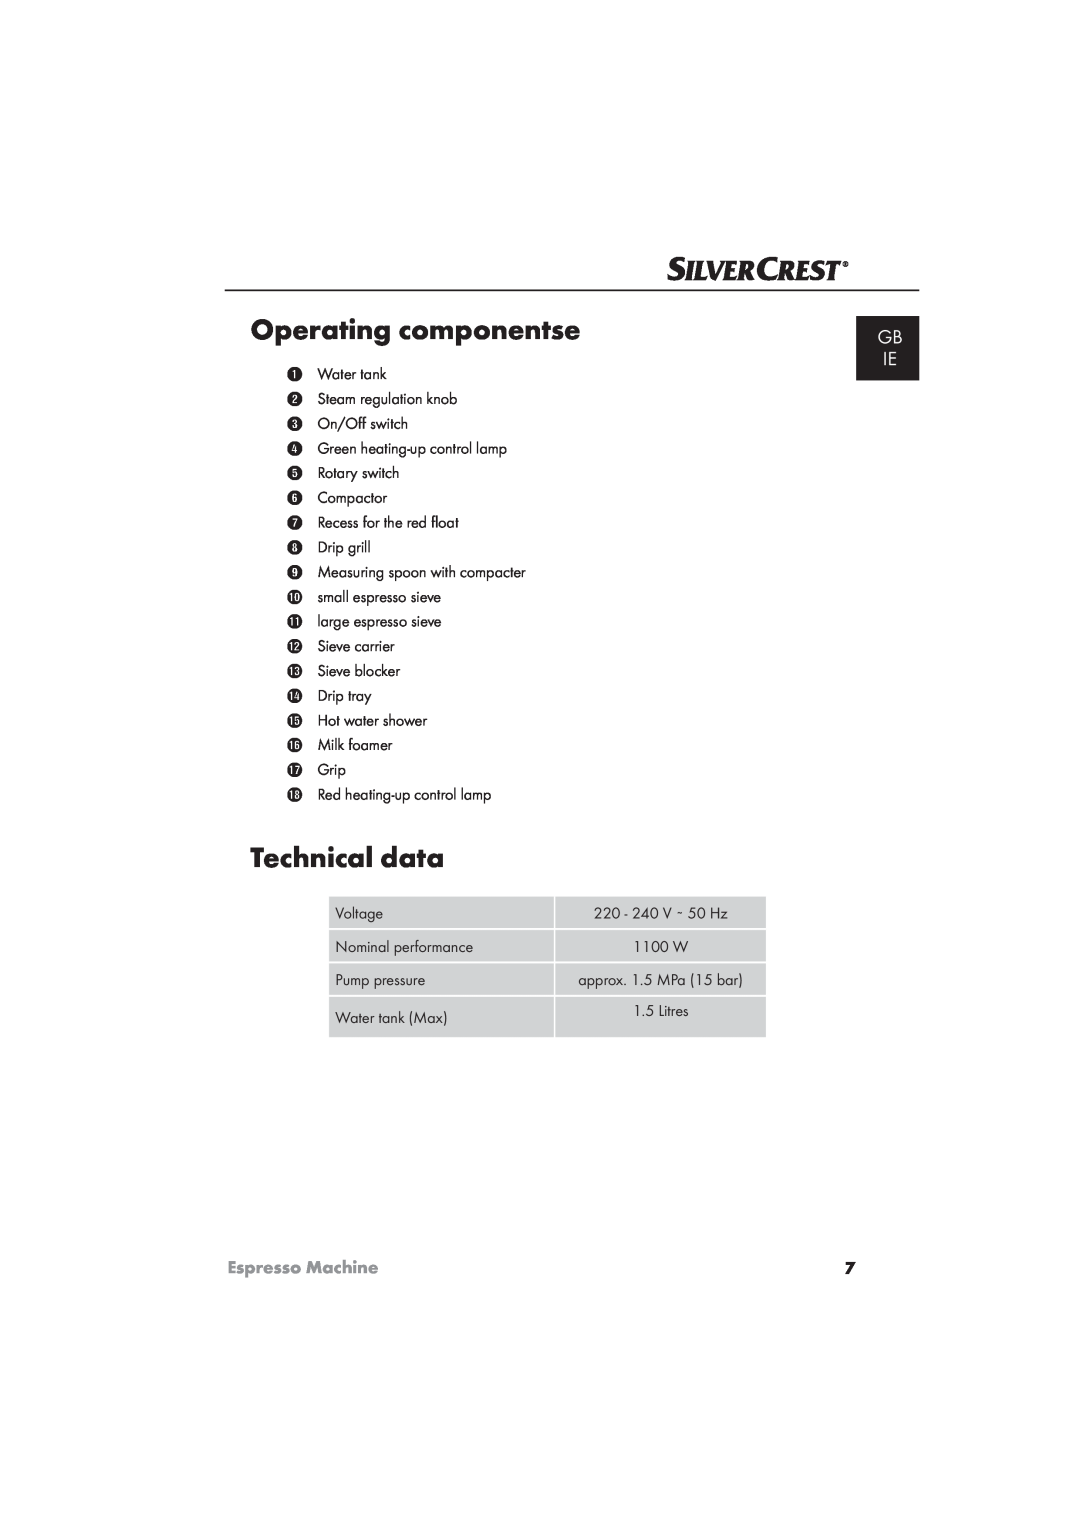 Silvercrest SEM 1100 A1 manual Operating componentse, Technical data, Gb Ie, Espresso Machine 